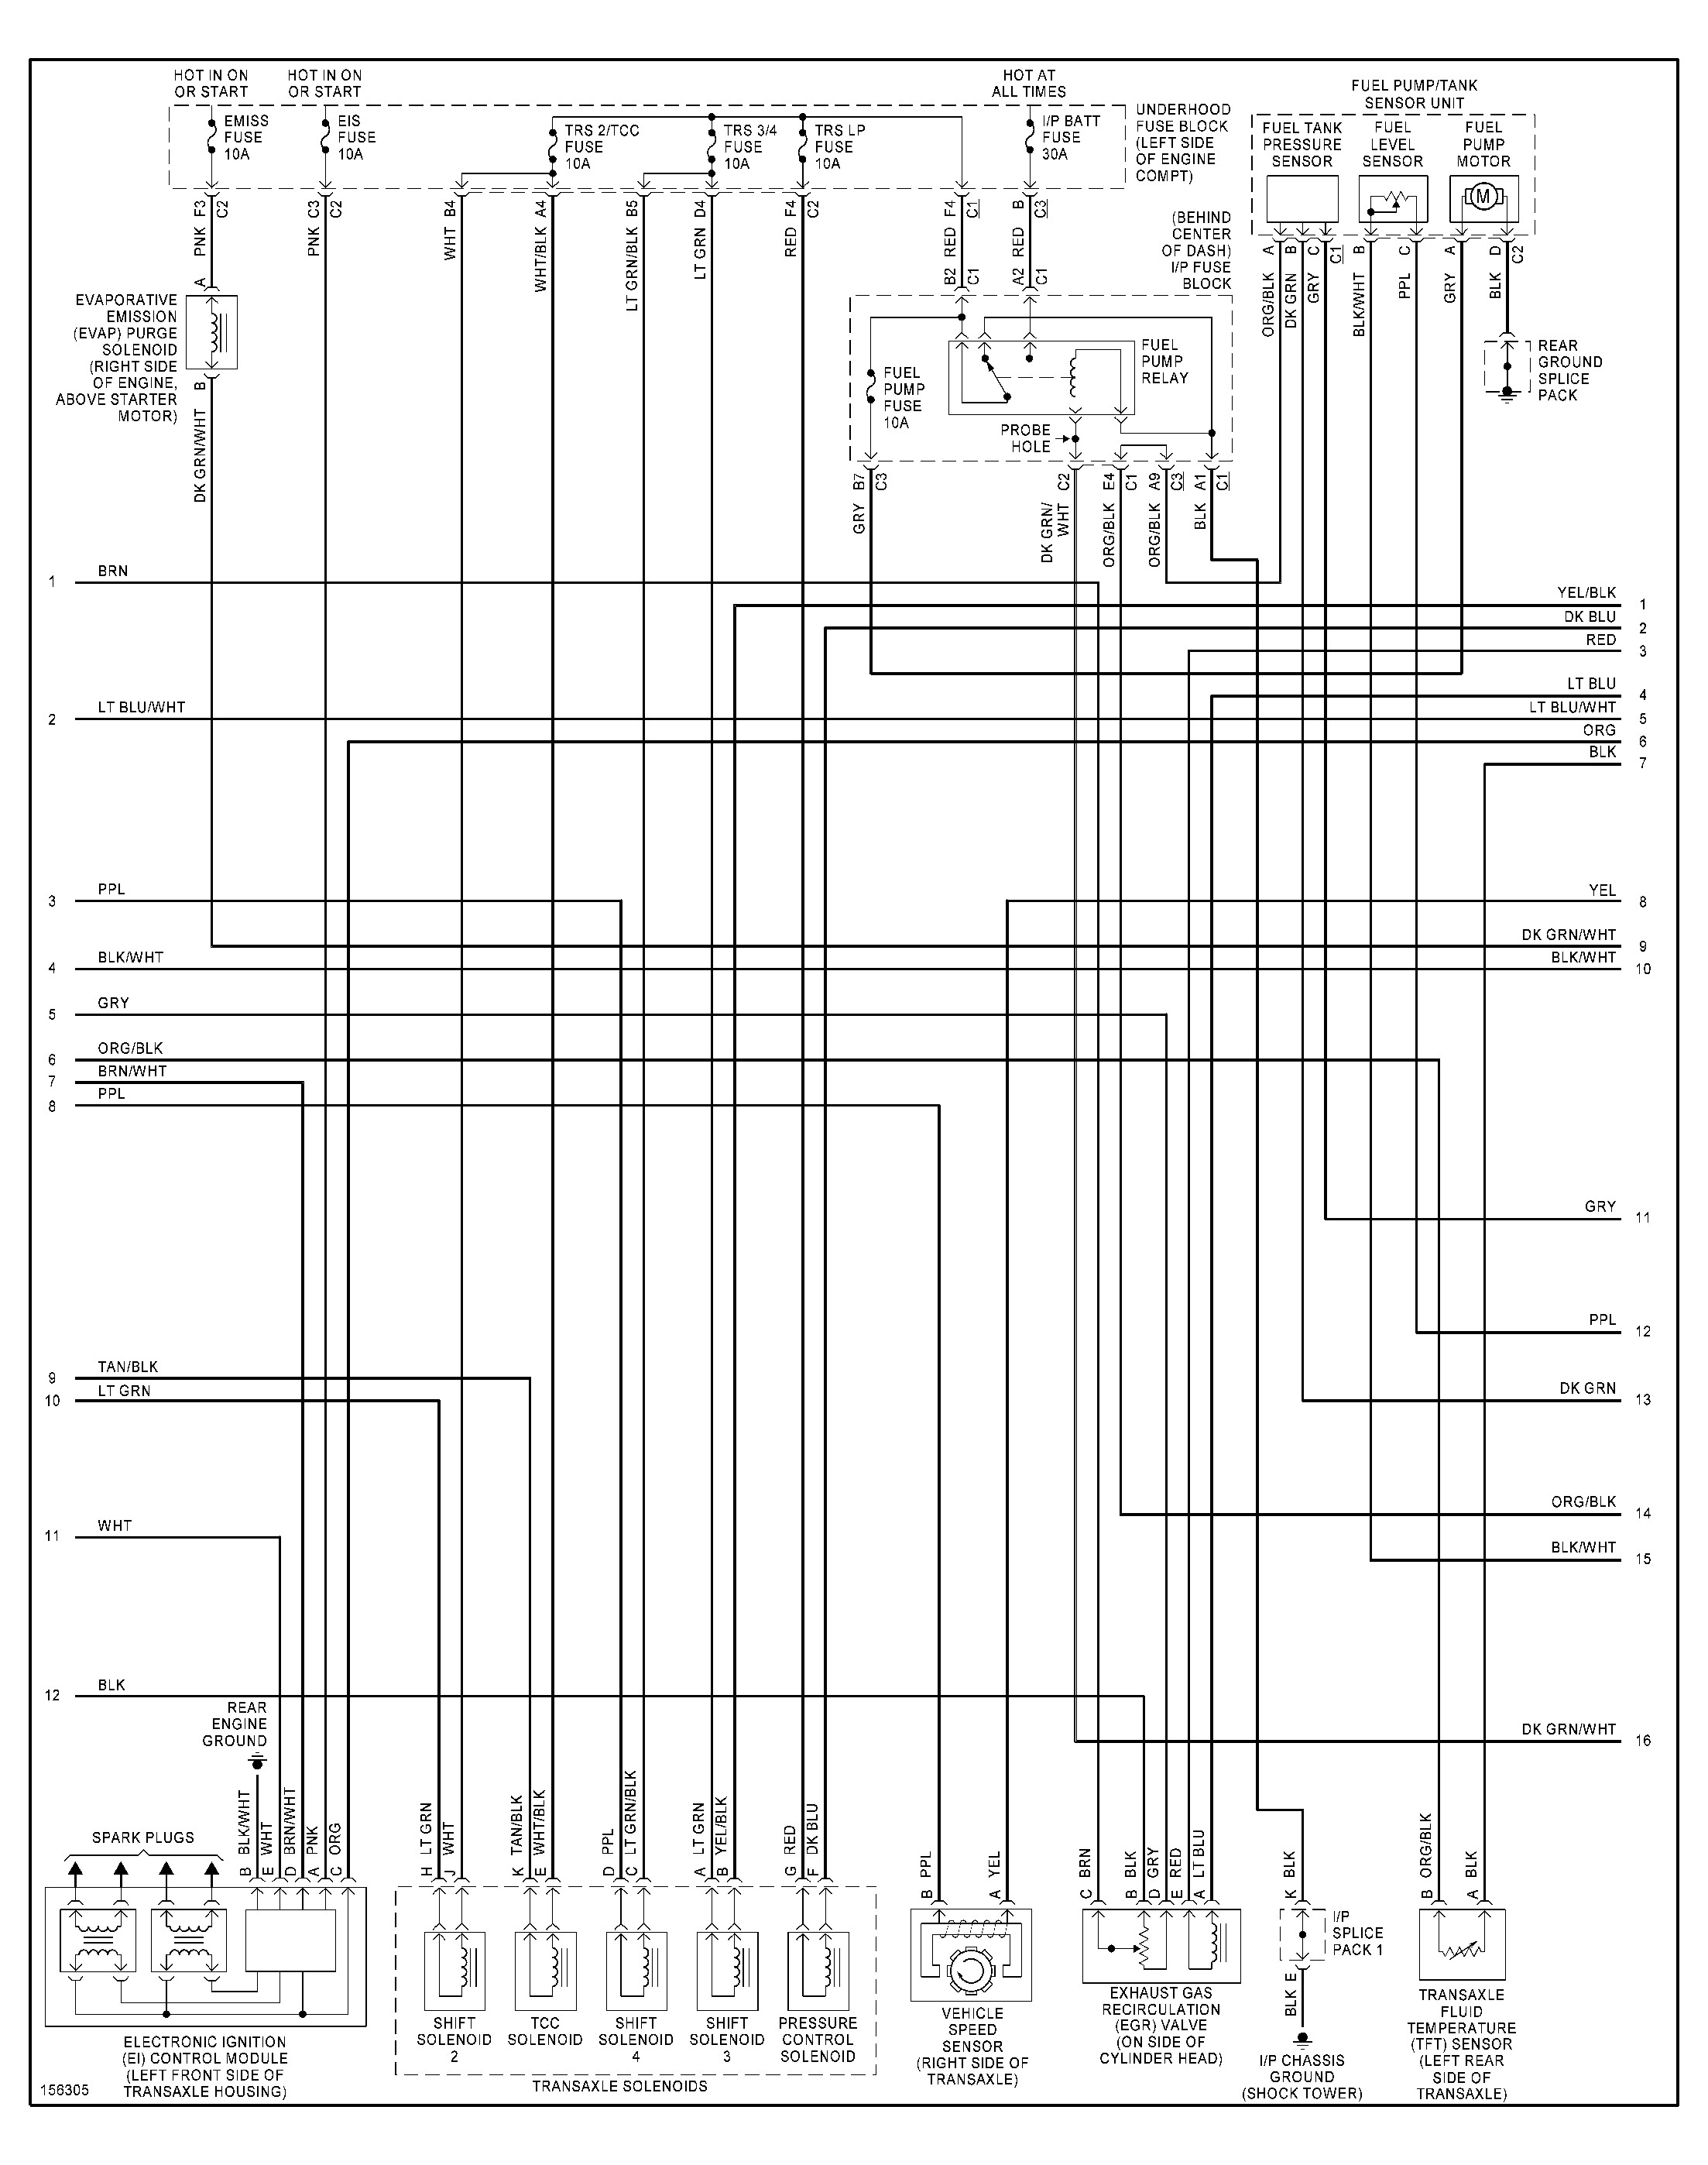 1997 Saturn Sl1 Engine Diagram 1997 Saturn Sc1 Engine Diagram Saturn Wiring Diagrams Instructions Of 1997 Saturn Sl1 Engine Diagram